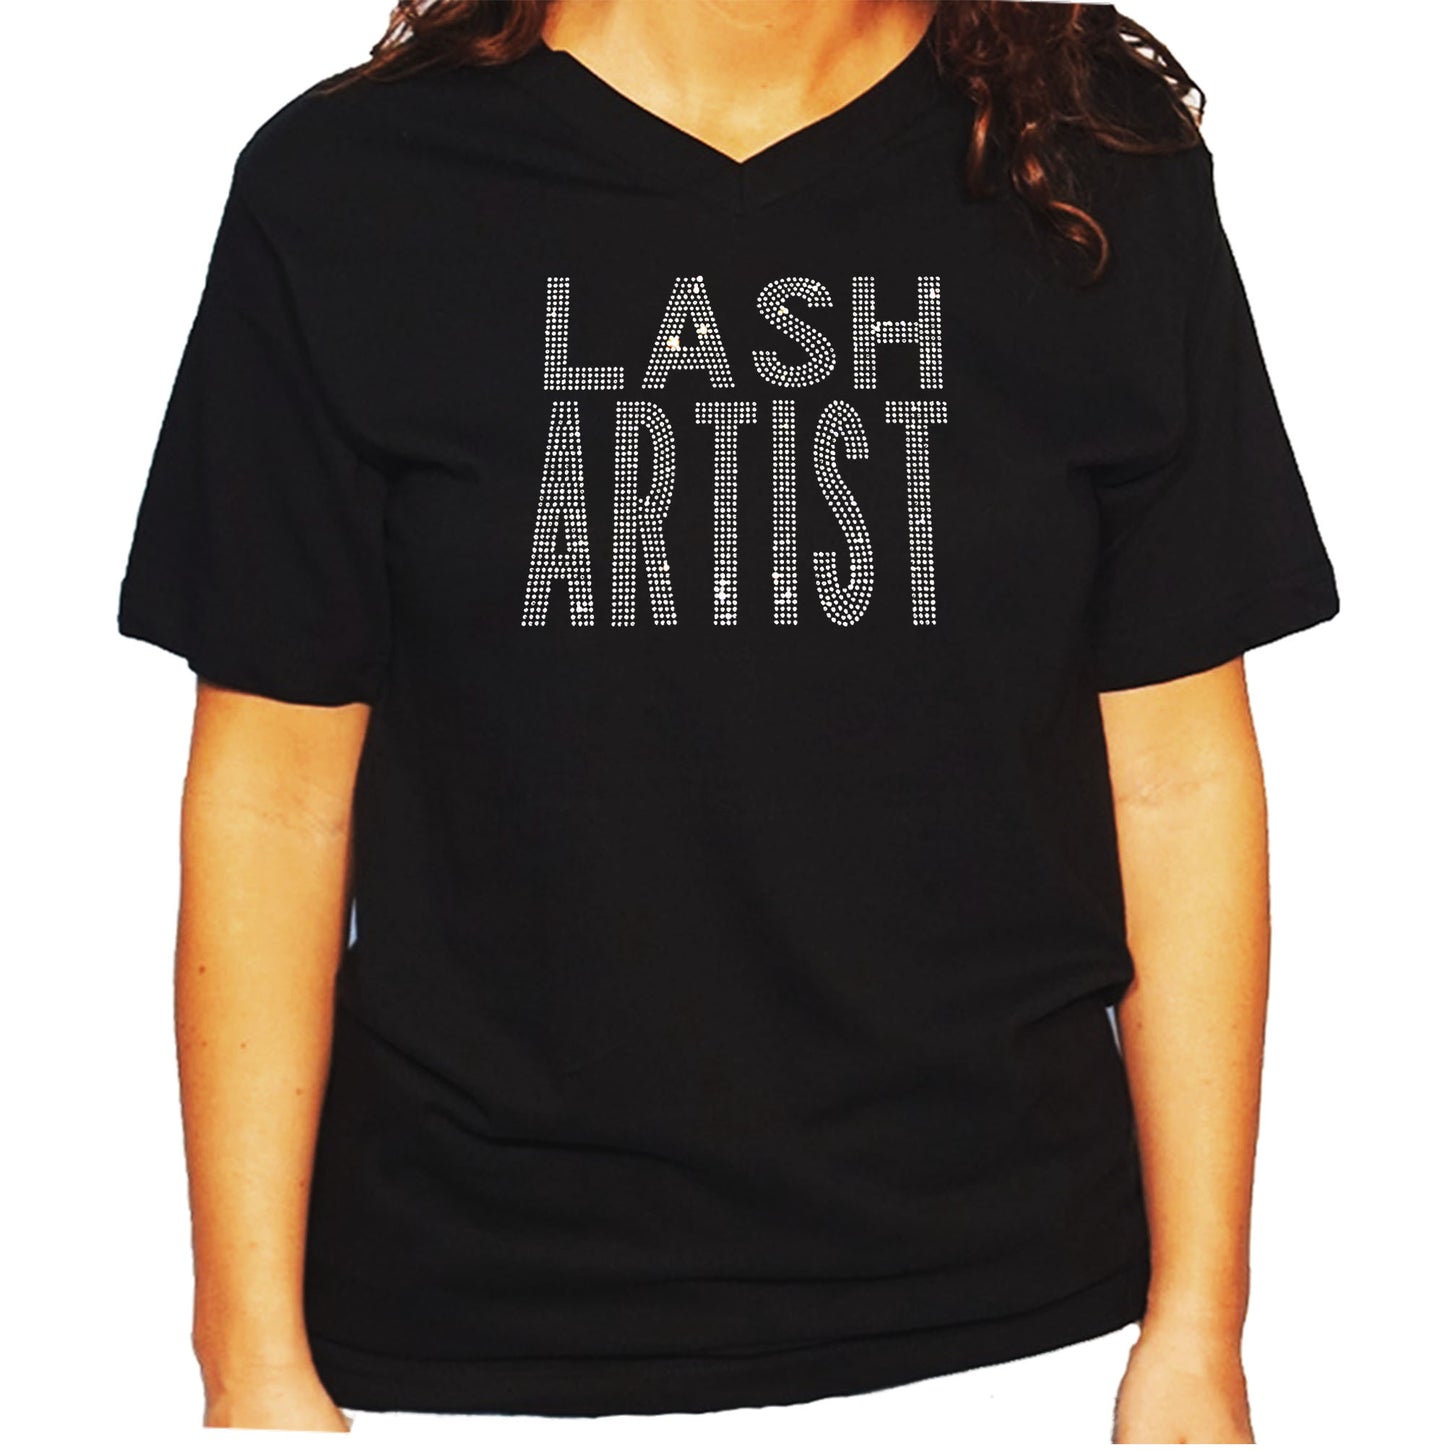 Women's / Unisex T-Shirt with Lash Artist in Rhinestones